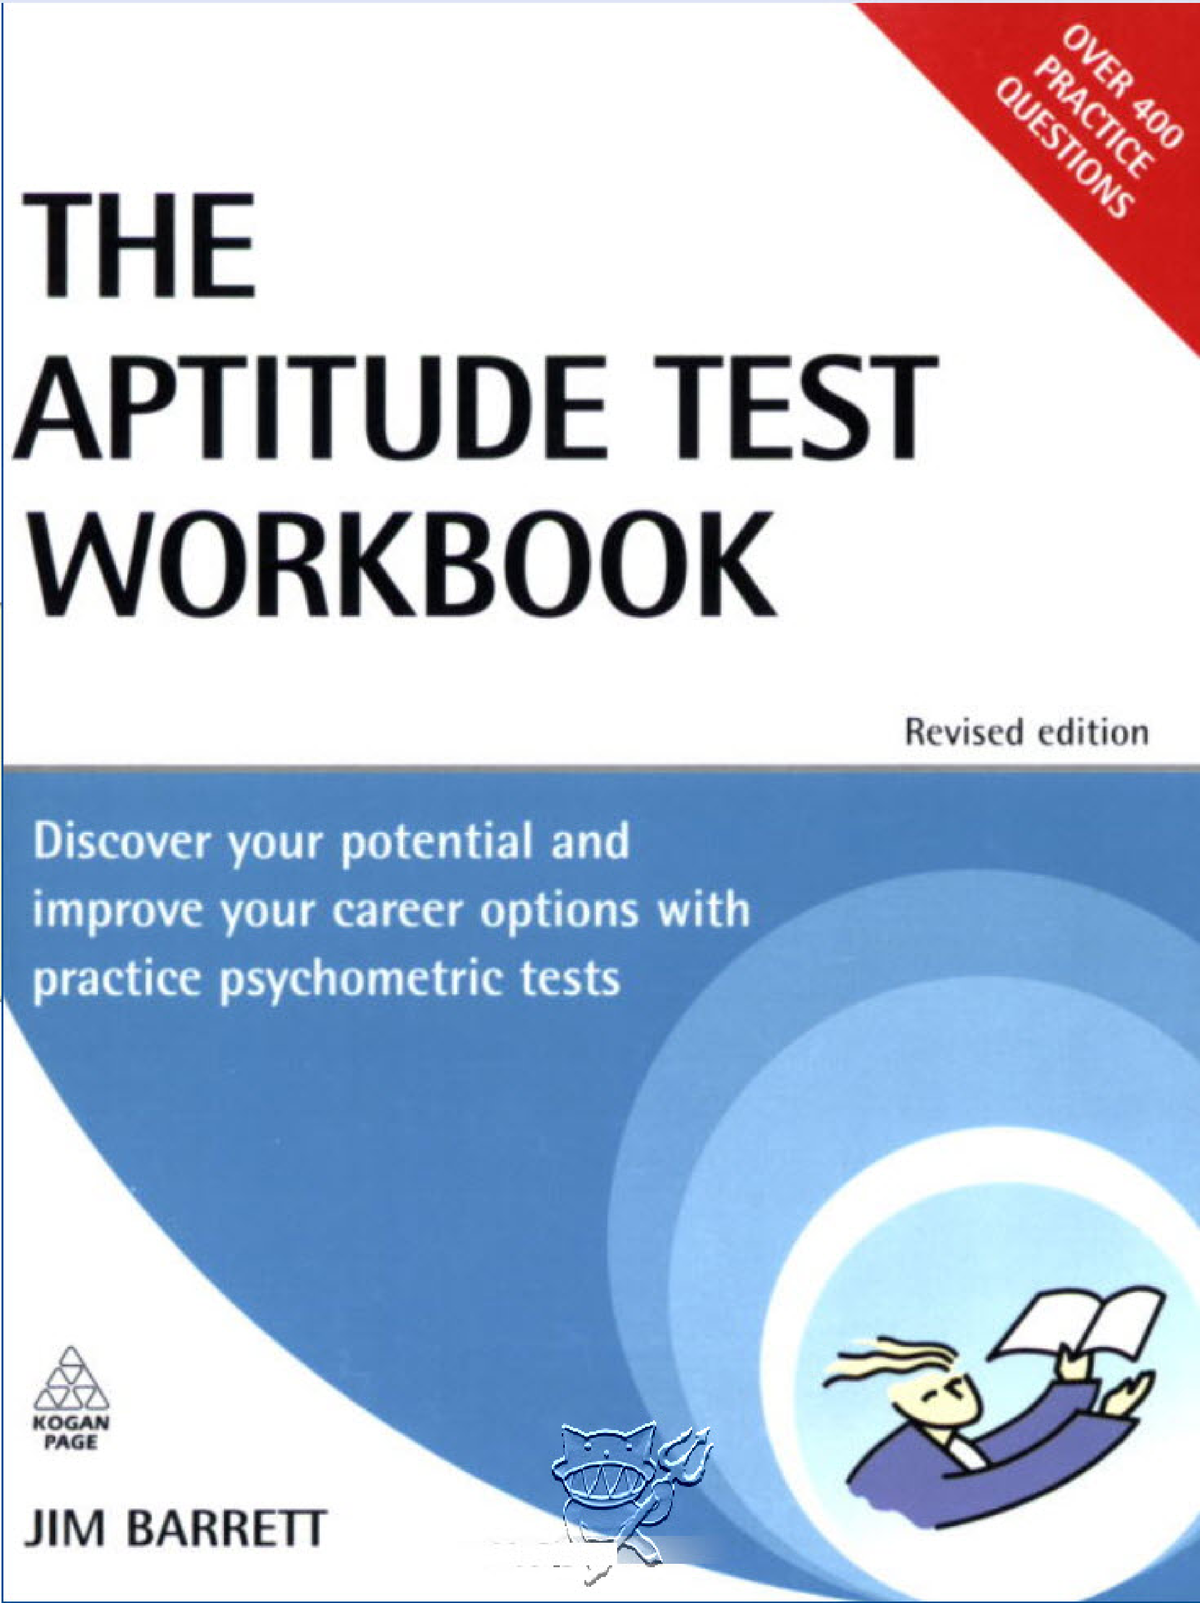 the-aptitude-test-workbook-i-the-aptitude-test-workbook-jim-barrett-revised-edition-the